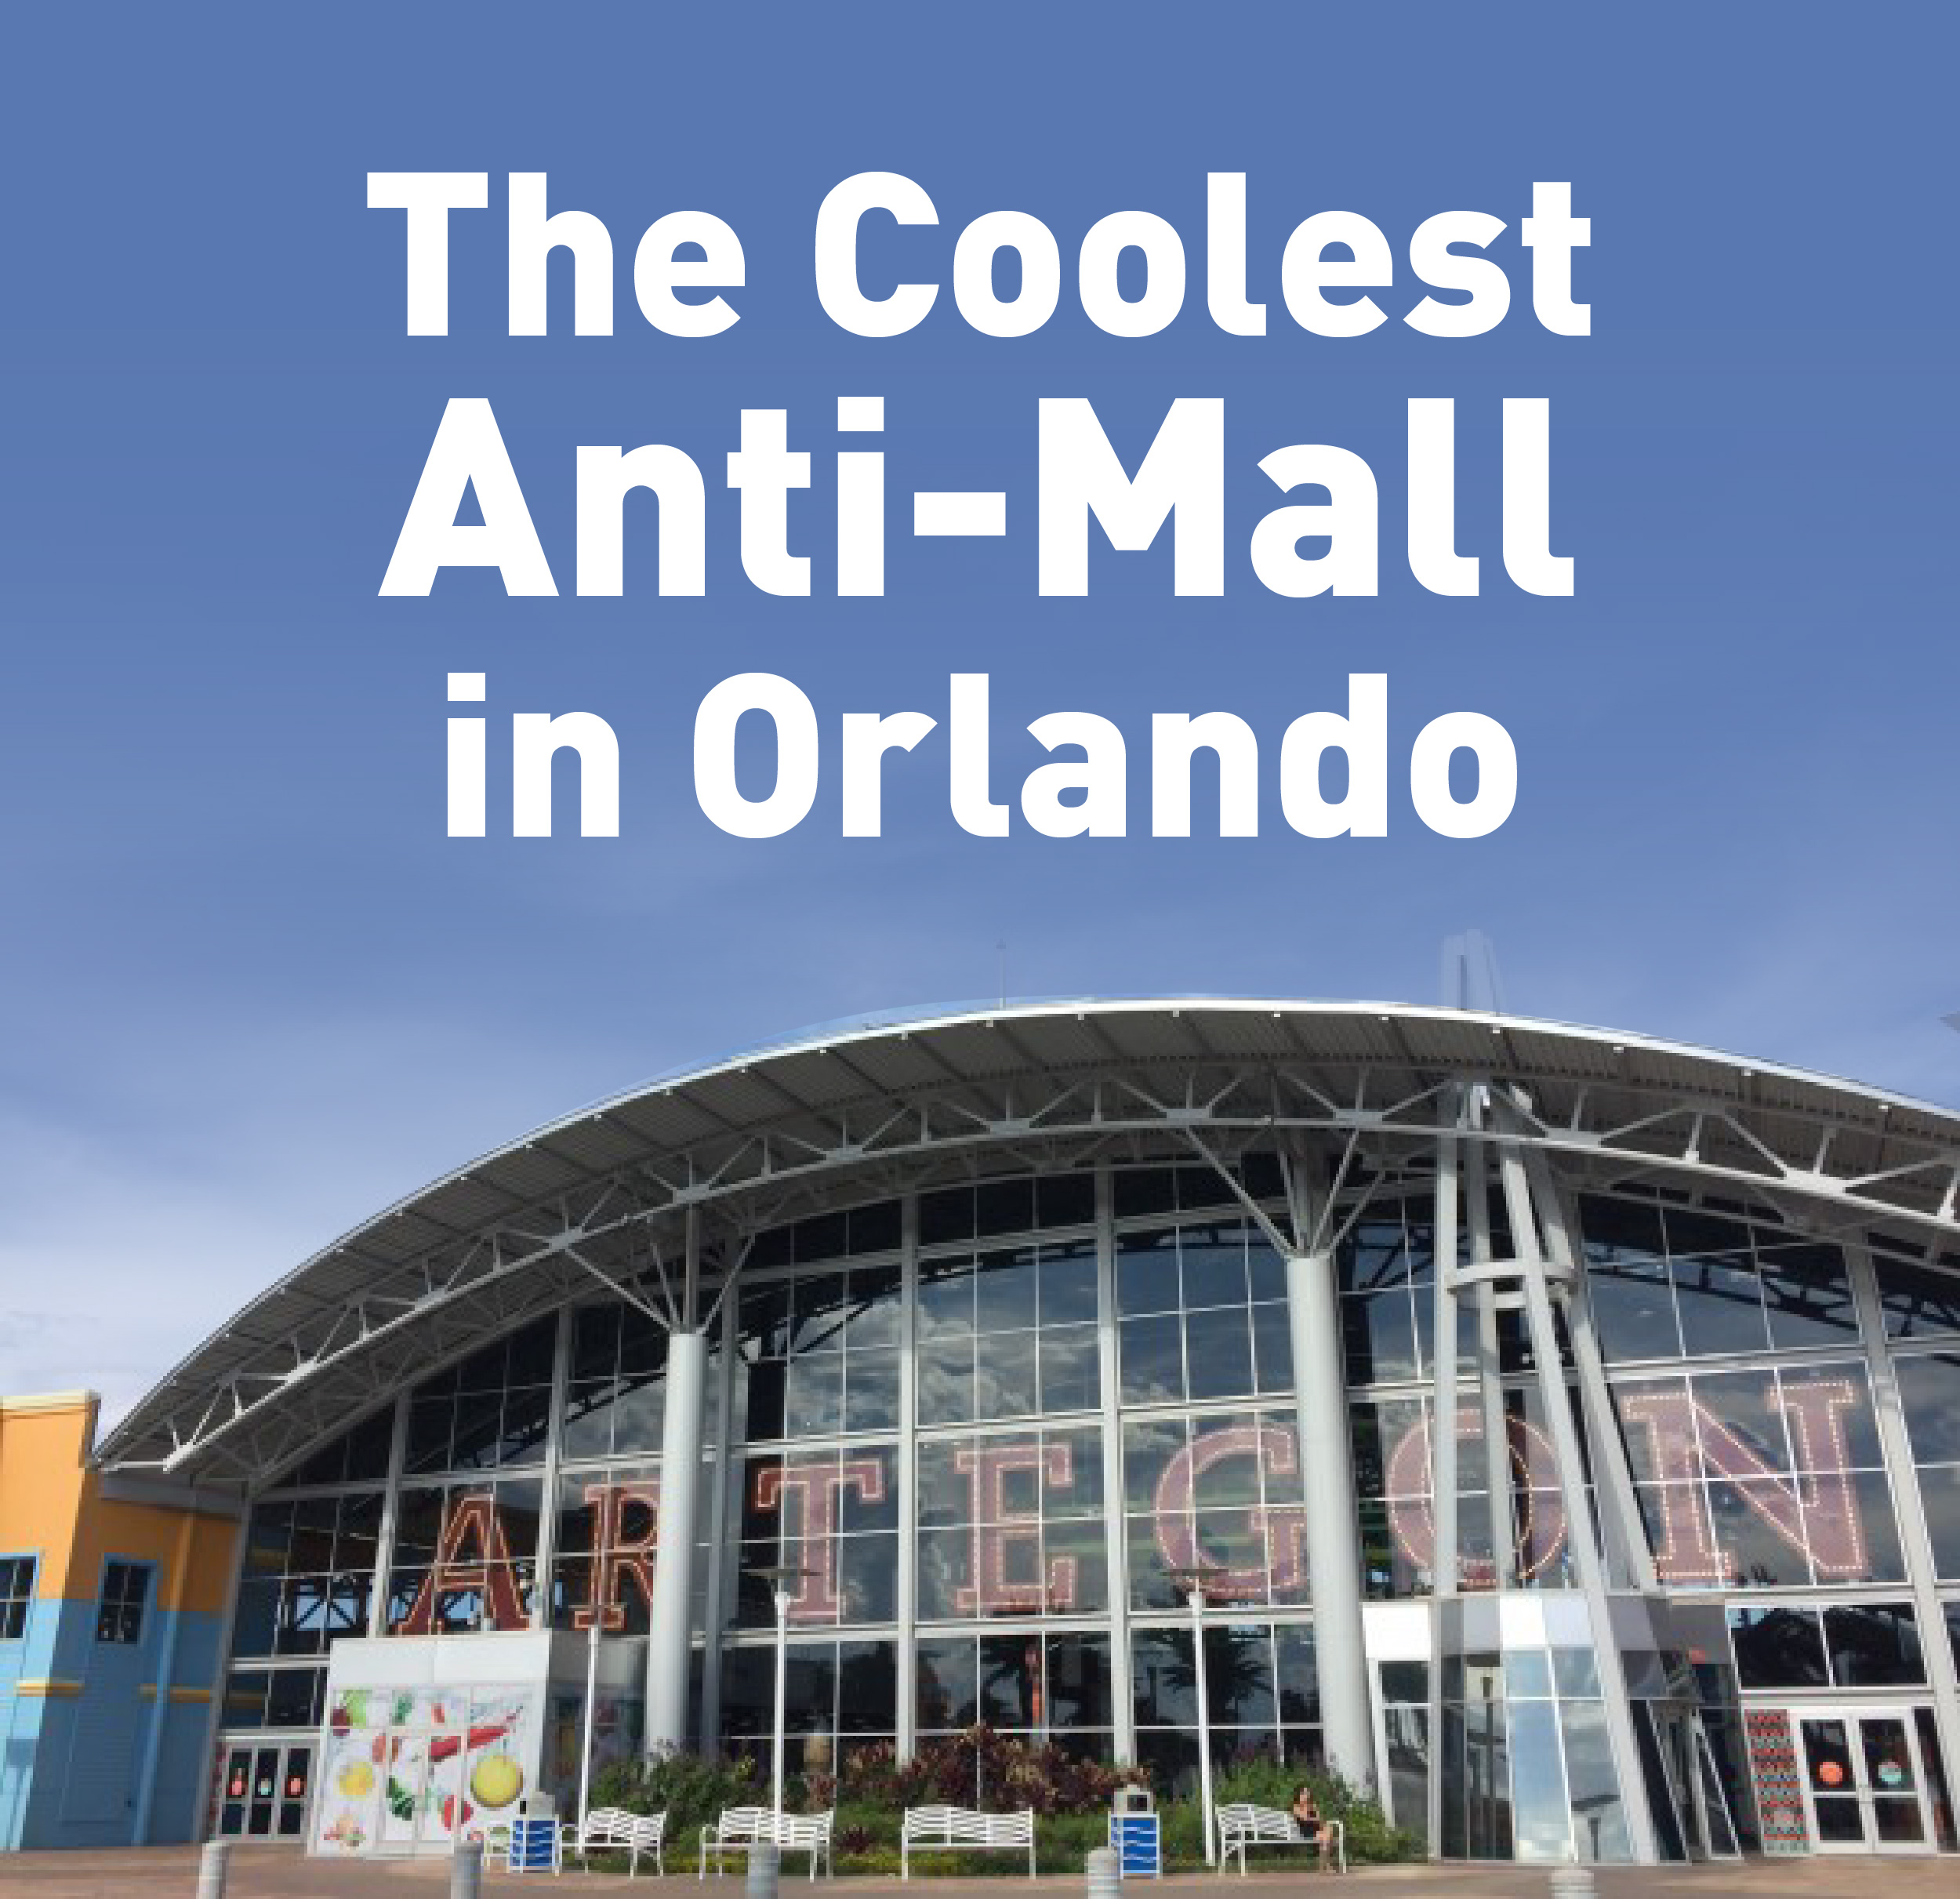 the coolest anti-mall in orlando